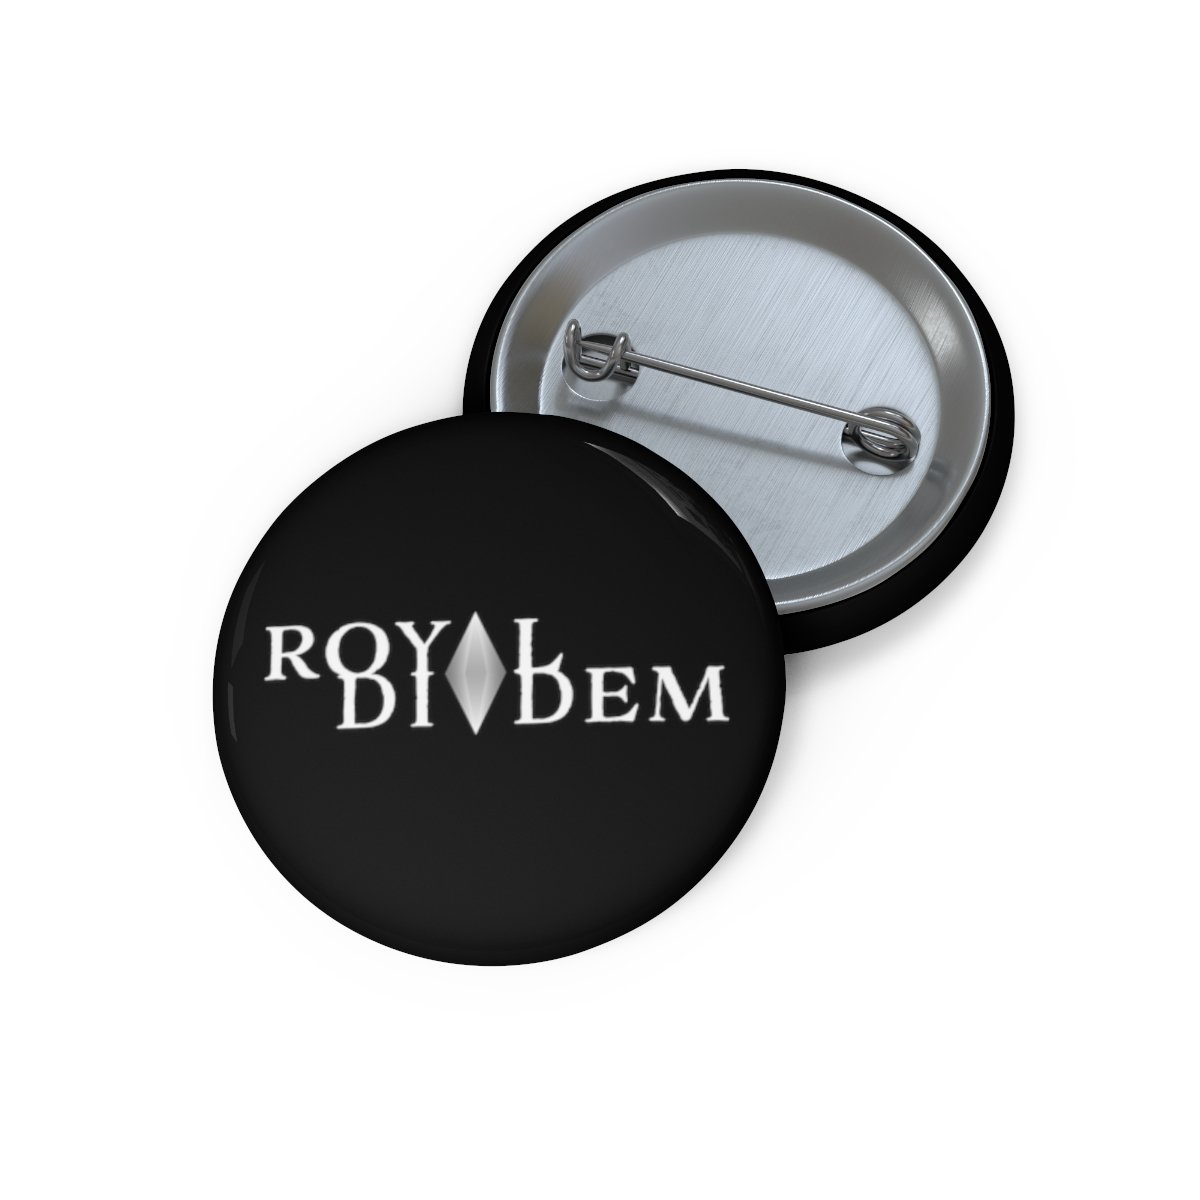 Royal Diadem Logo (Black) Pin Buttons